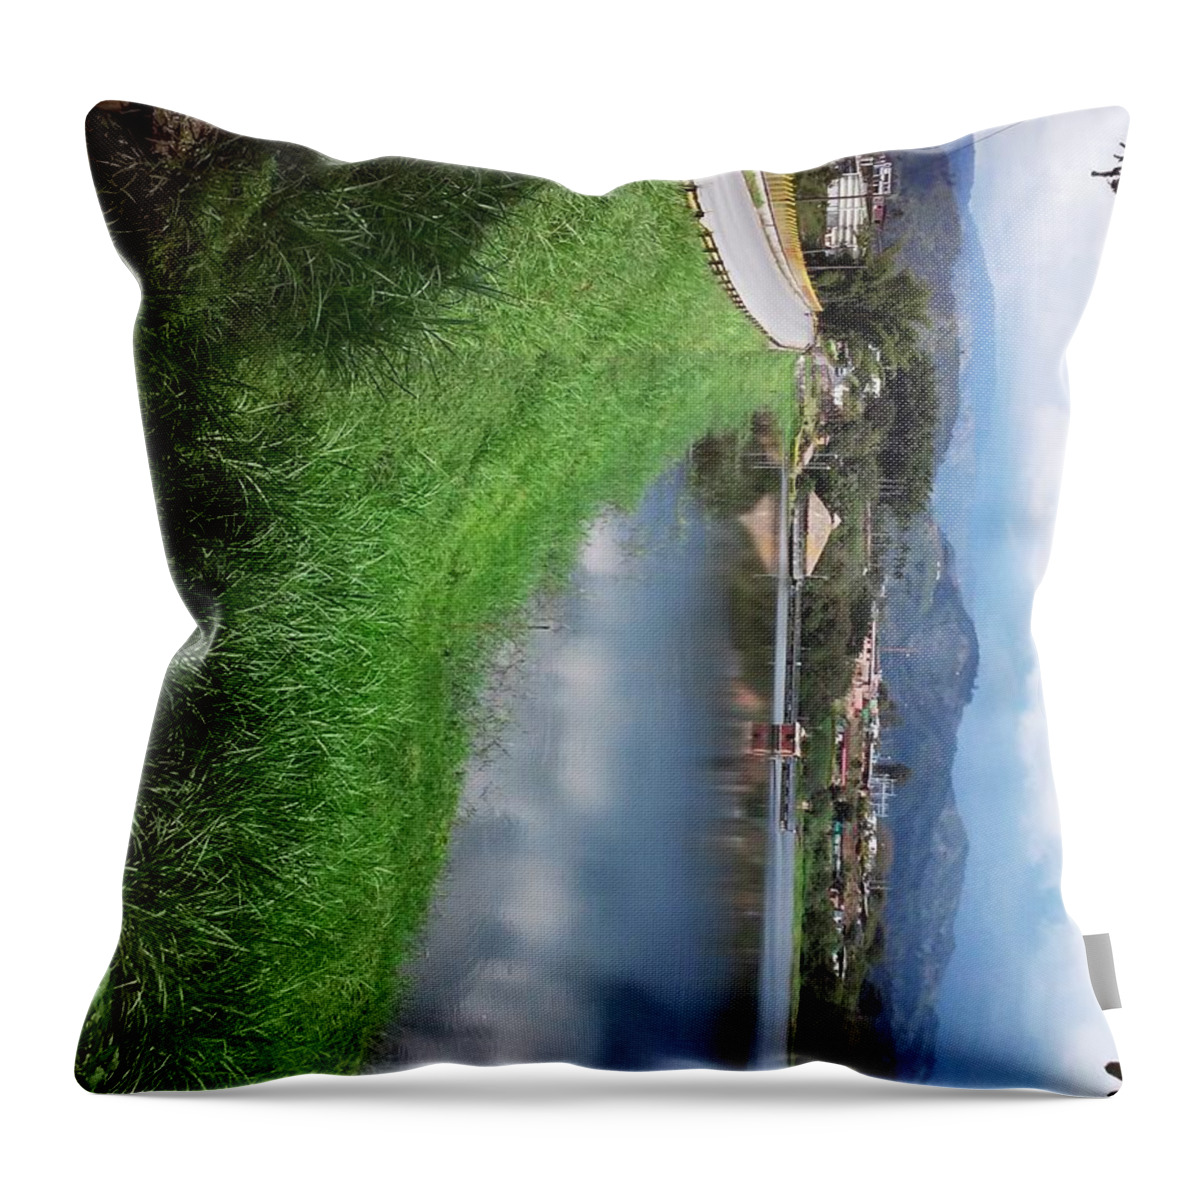  Throw Pillow featuring the photograph Balsora Dam Lake #14 by Nestor Cardona Cardona